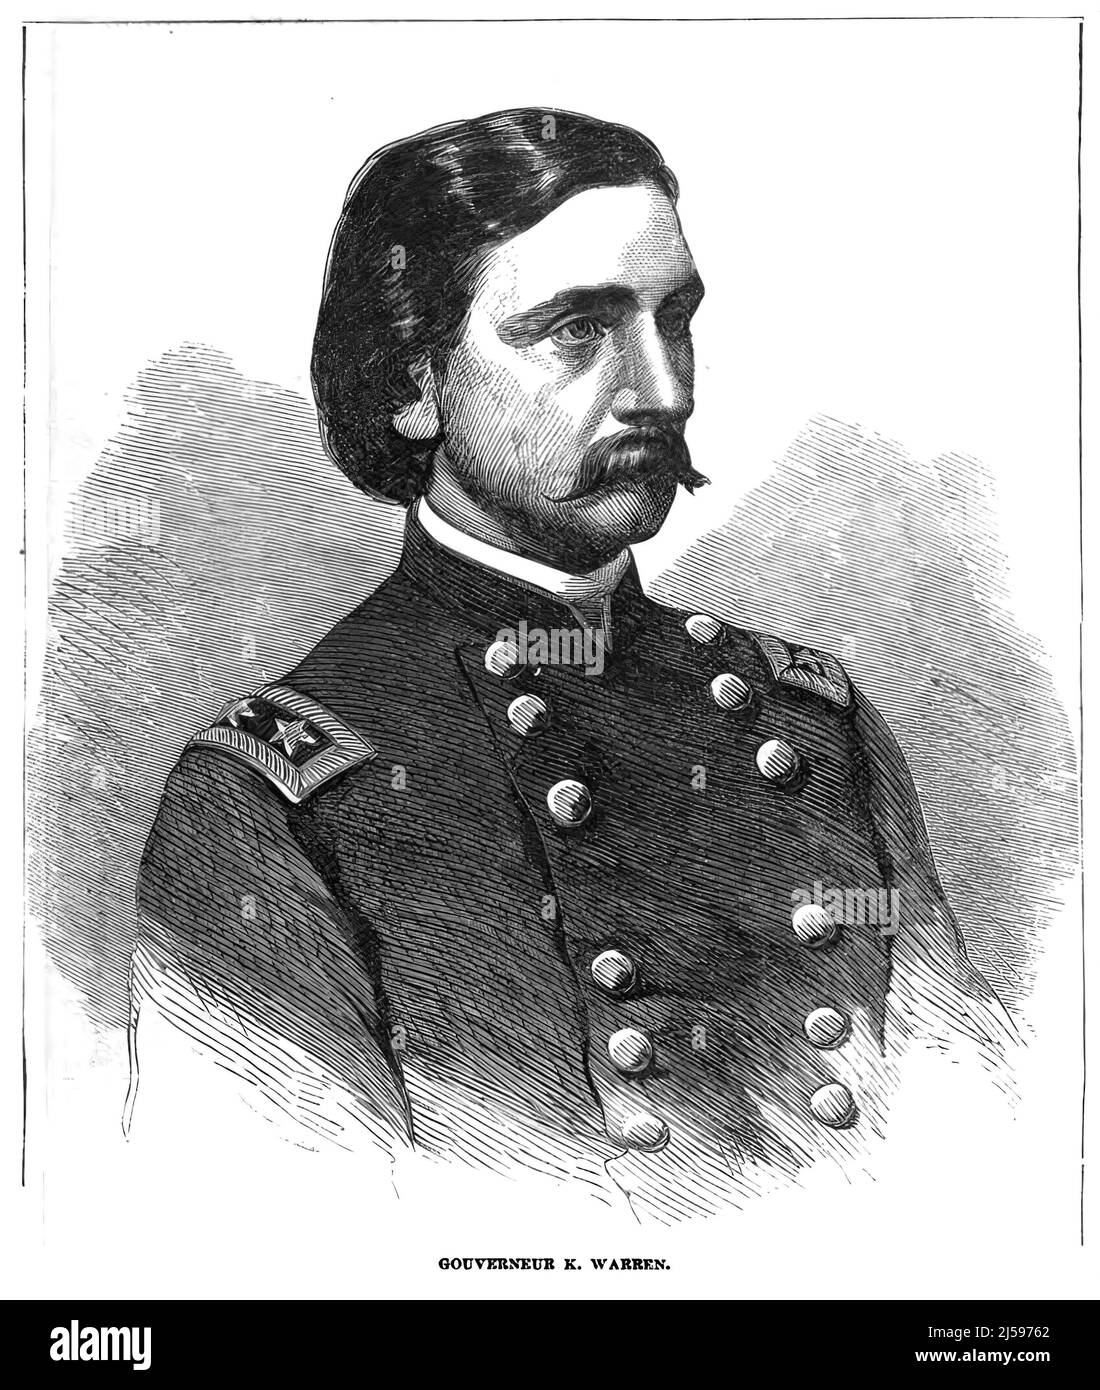 Portrait of Gouverneur Kemble Warren, Union Army Major General in the American Civil War. 19th century illustration Stock Photo